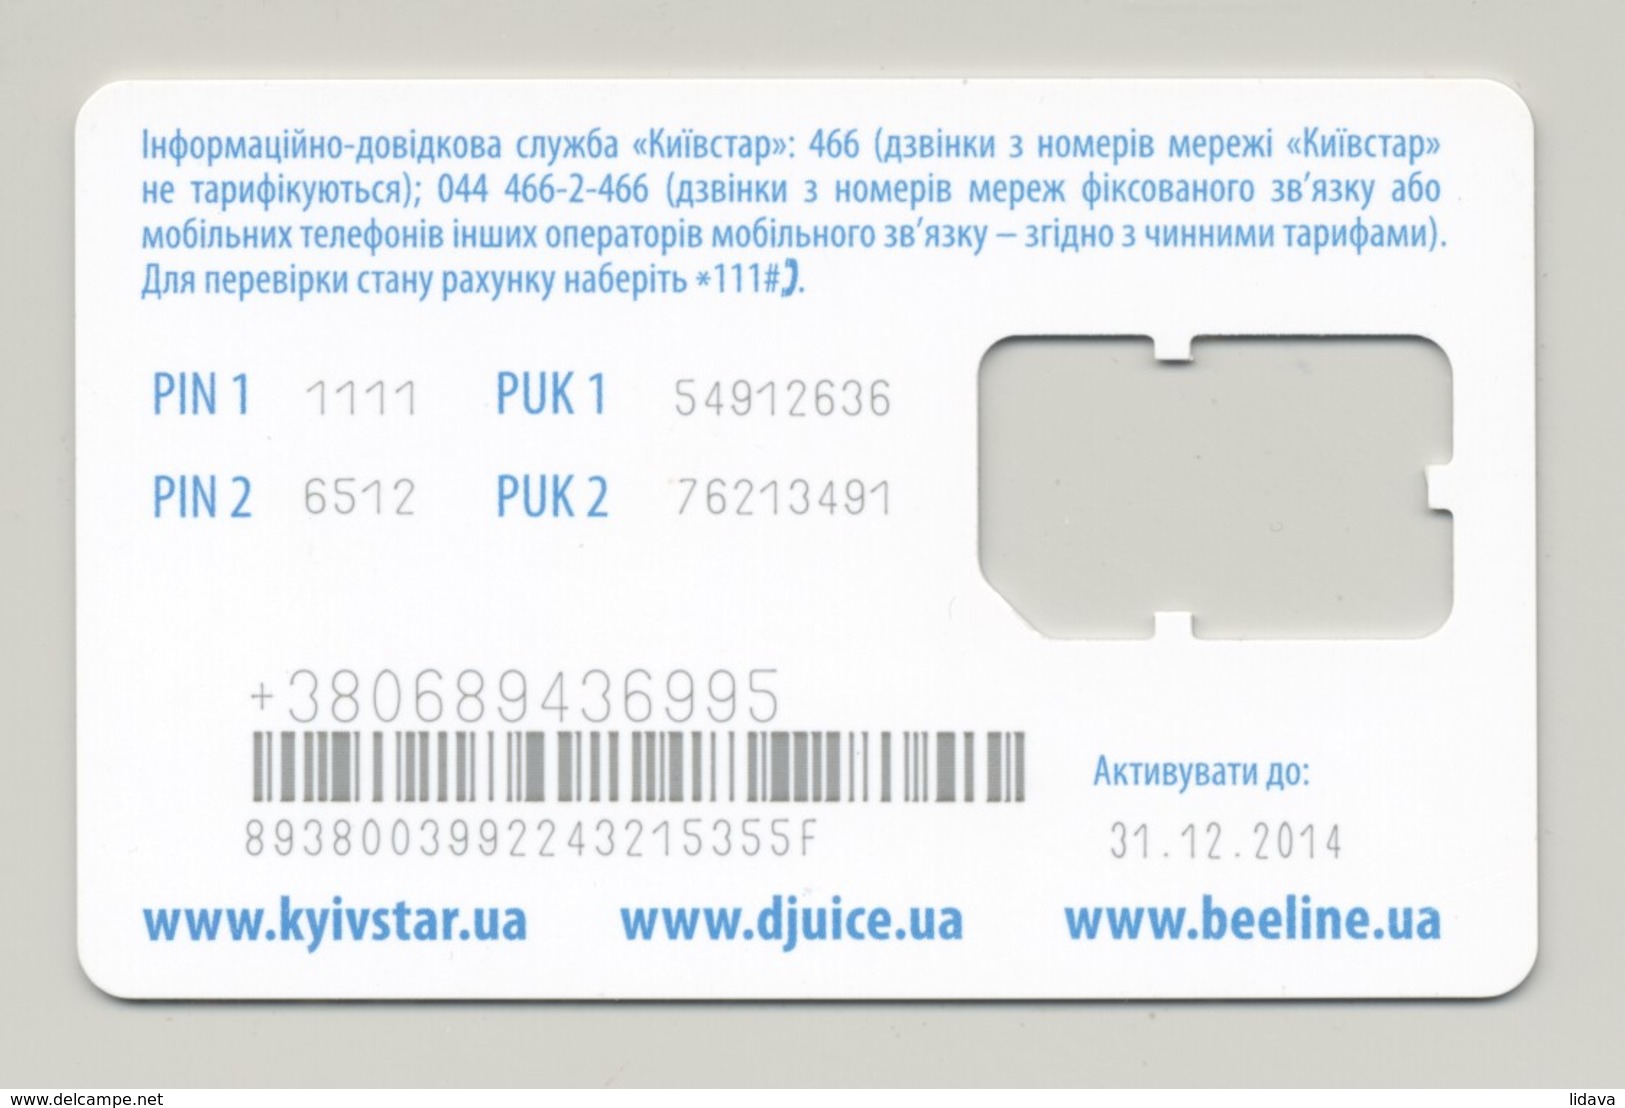 UKRAINE Used SIM GSM Phone Card Kyivstar Without Chip Patterns Type 2 - Ukraine